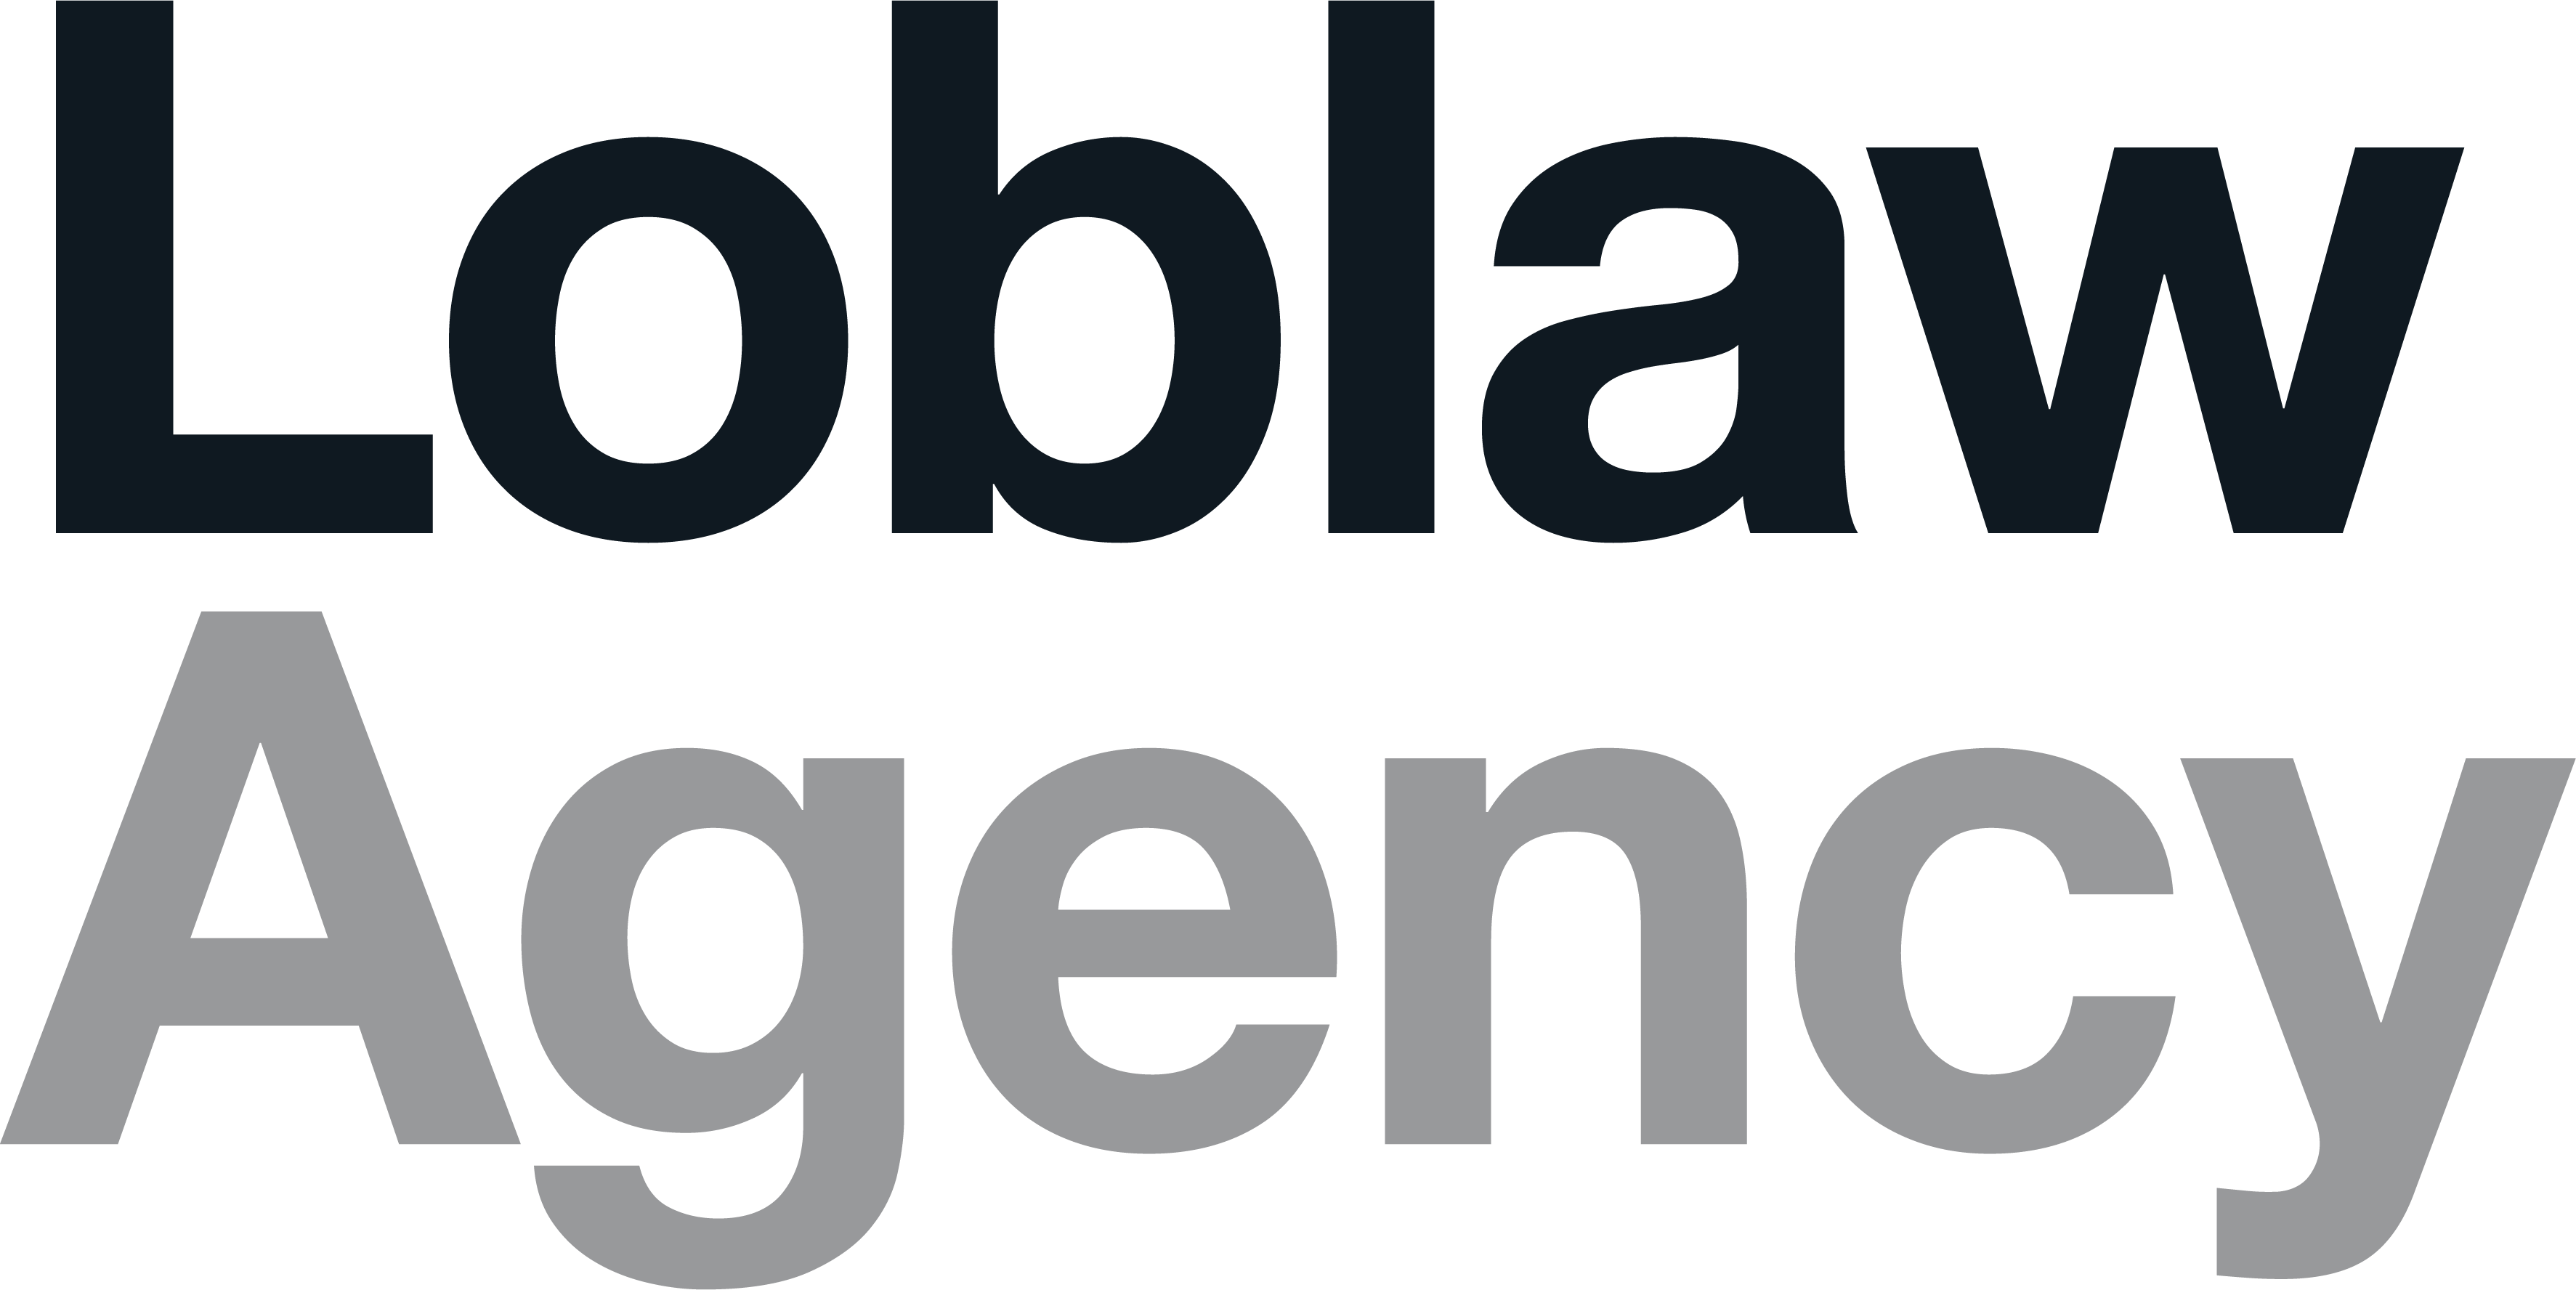 Loblaw Agency